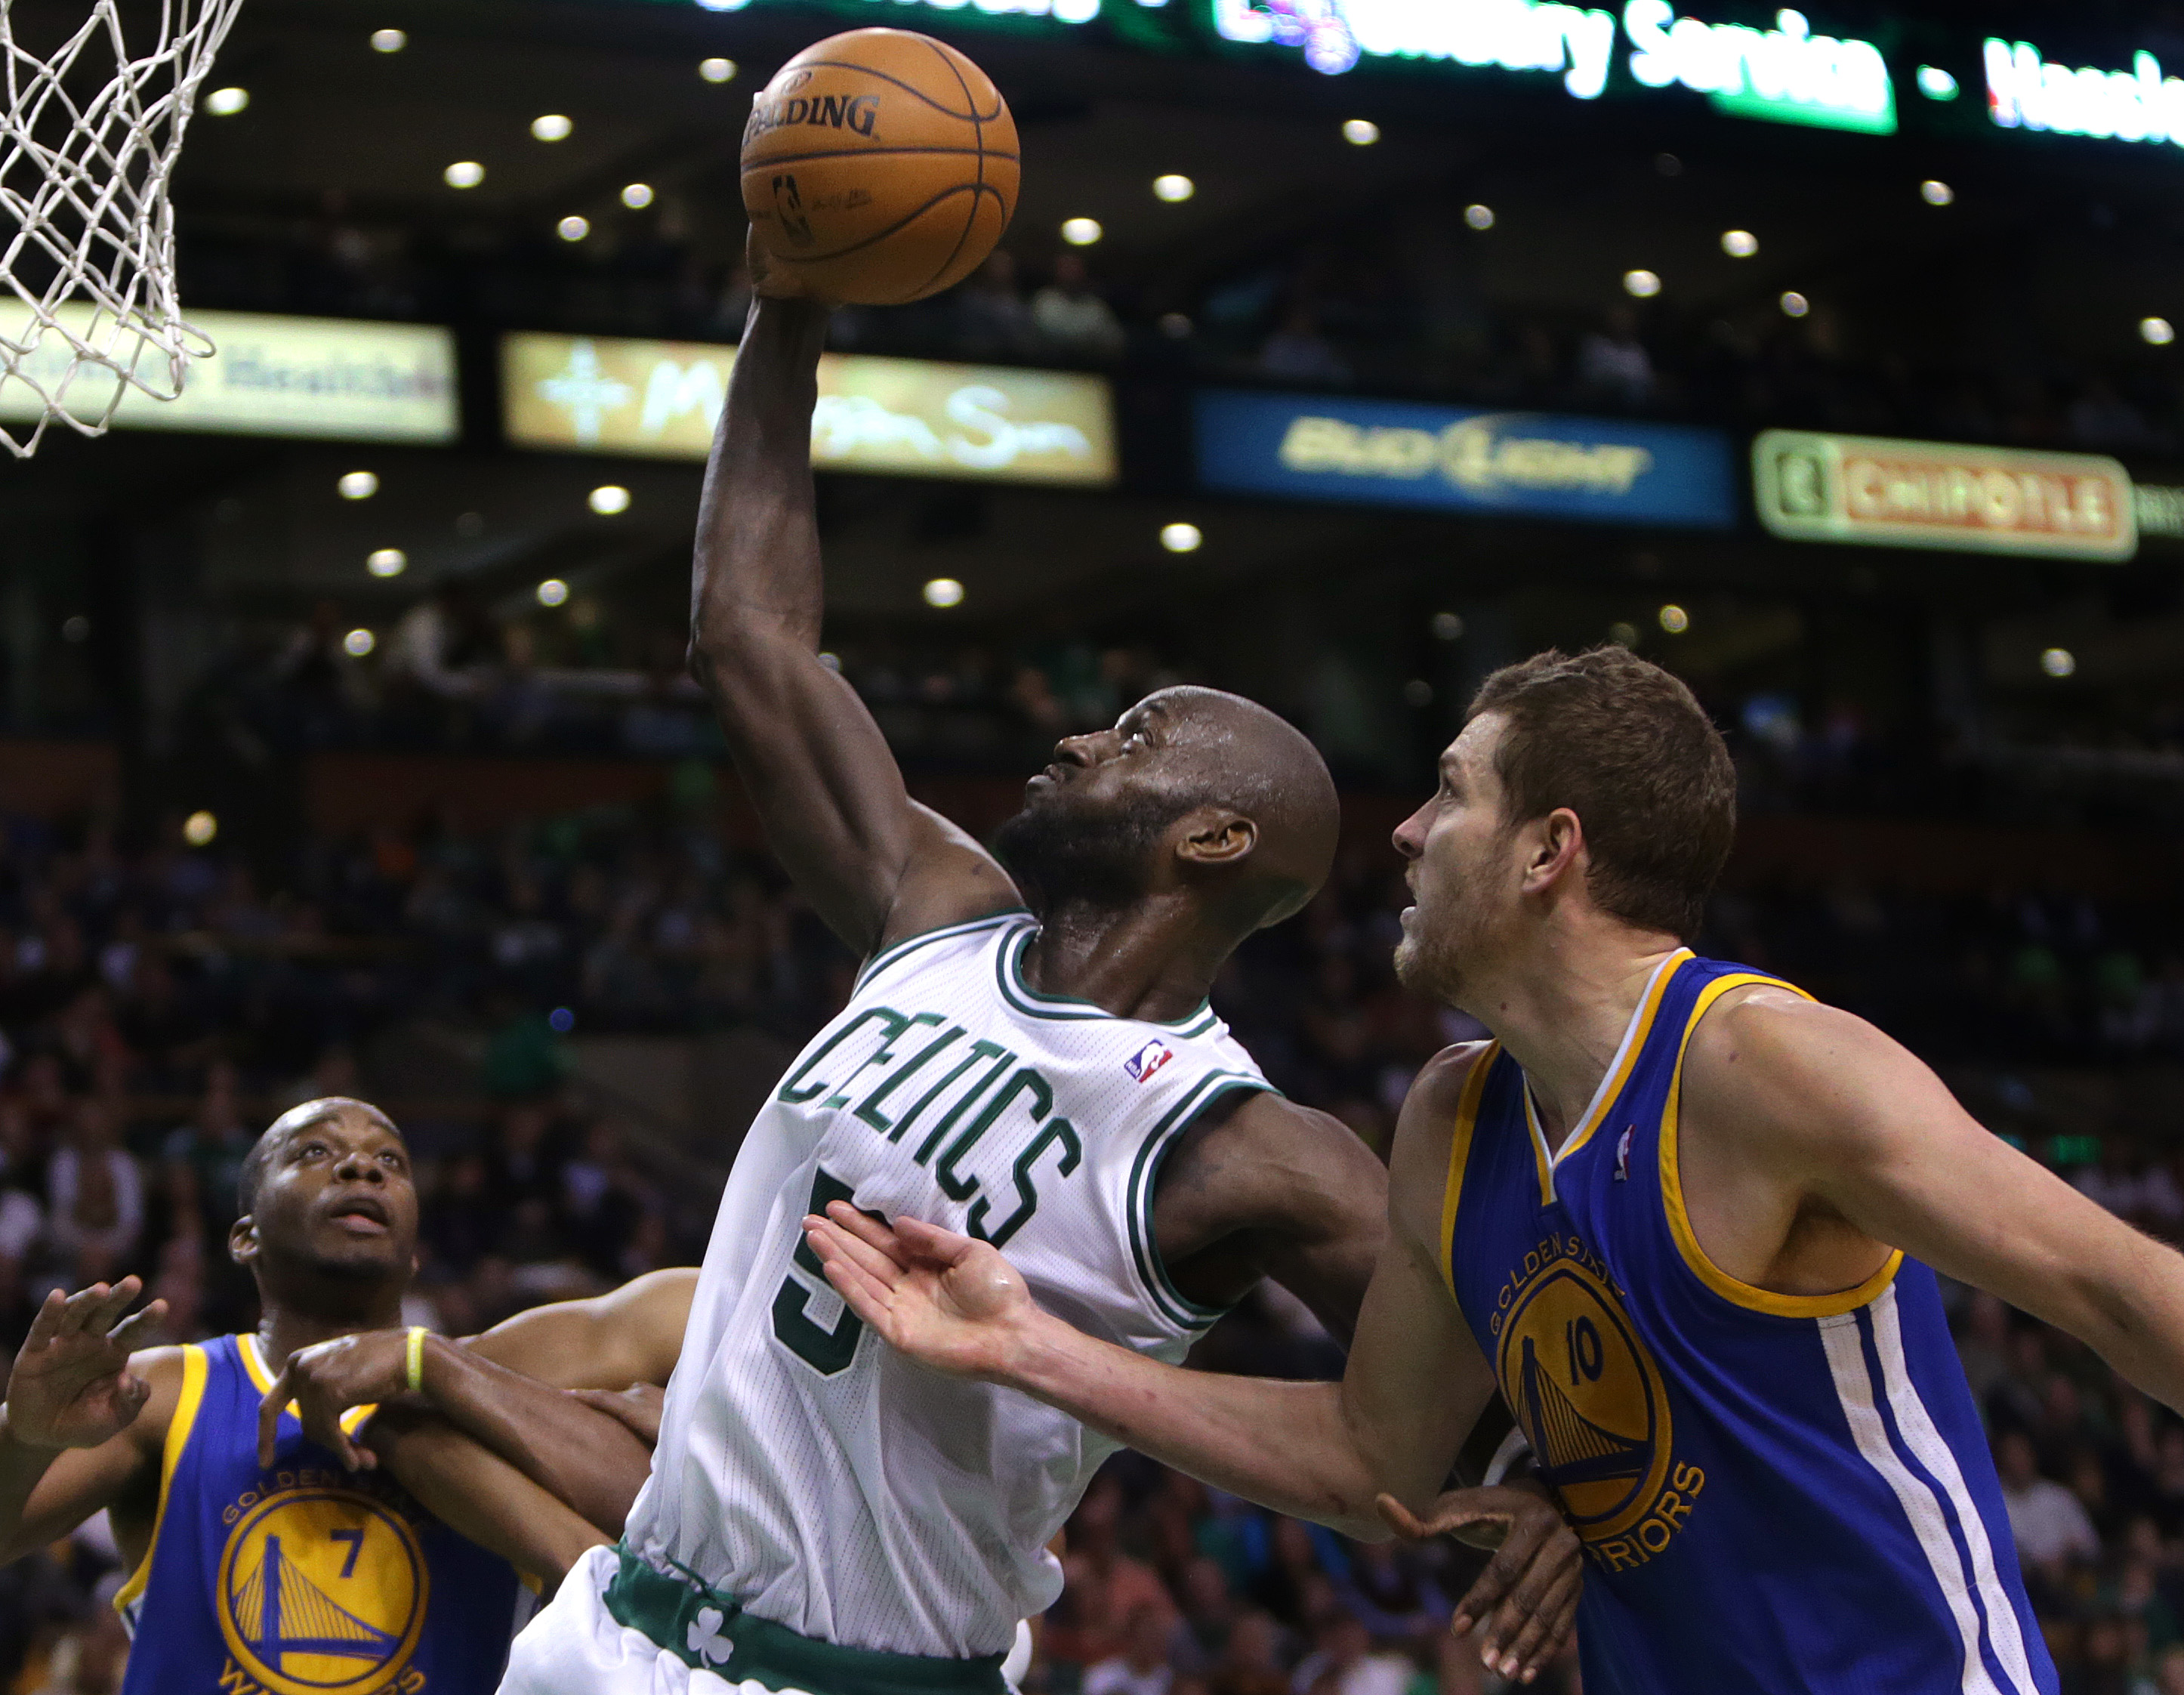 Former Boston Celtics forward Kevin Garnett battles for a rebound during a game against the Golden State Warriors